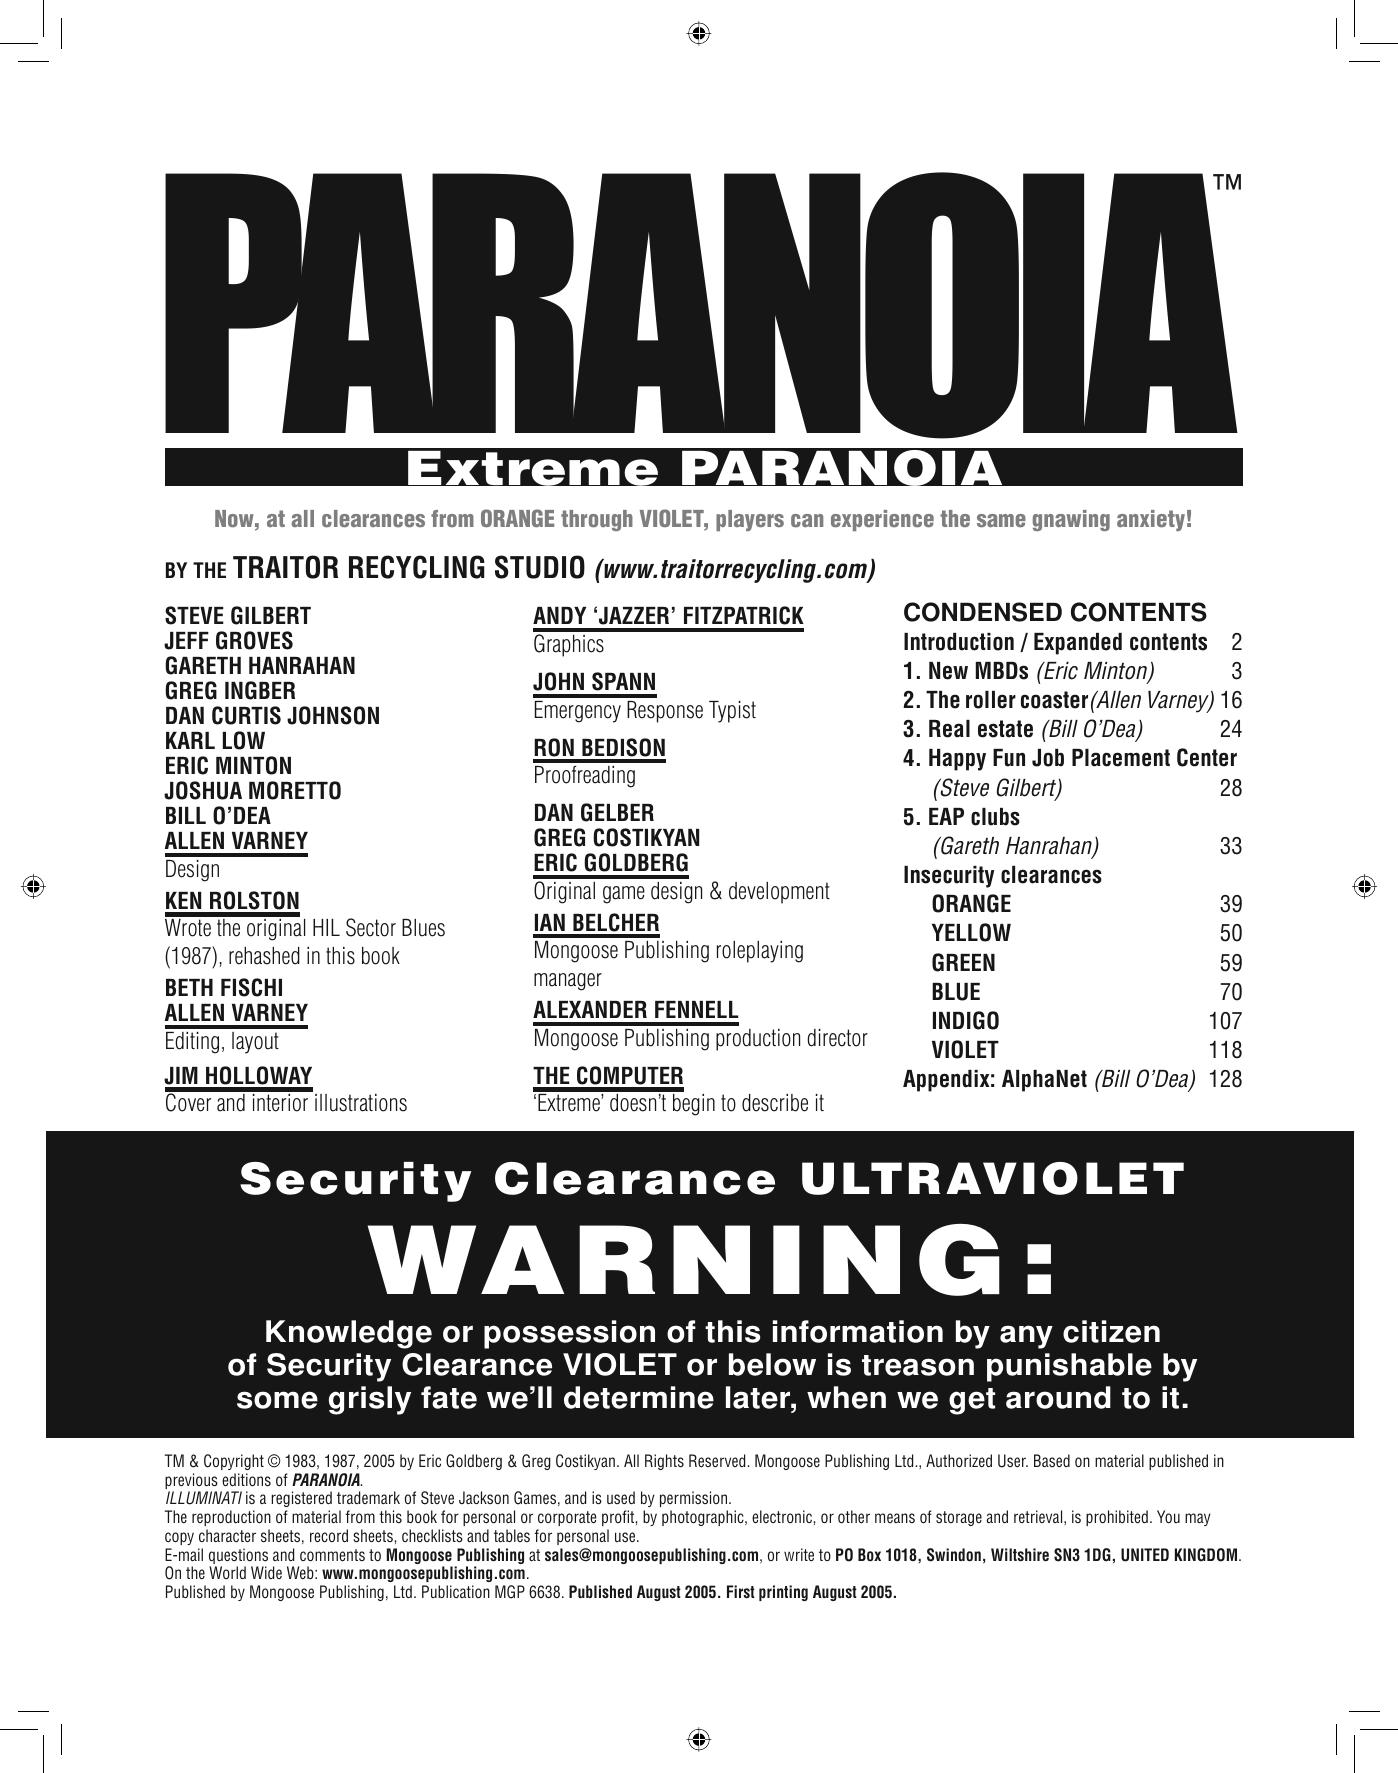 ExtremeParanoiaBodytext_pp1-38.indd